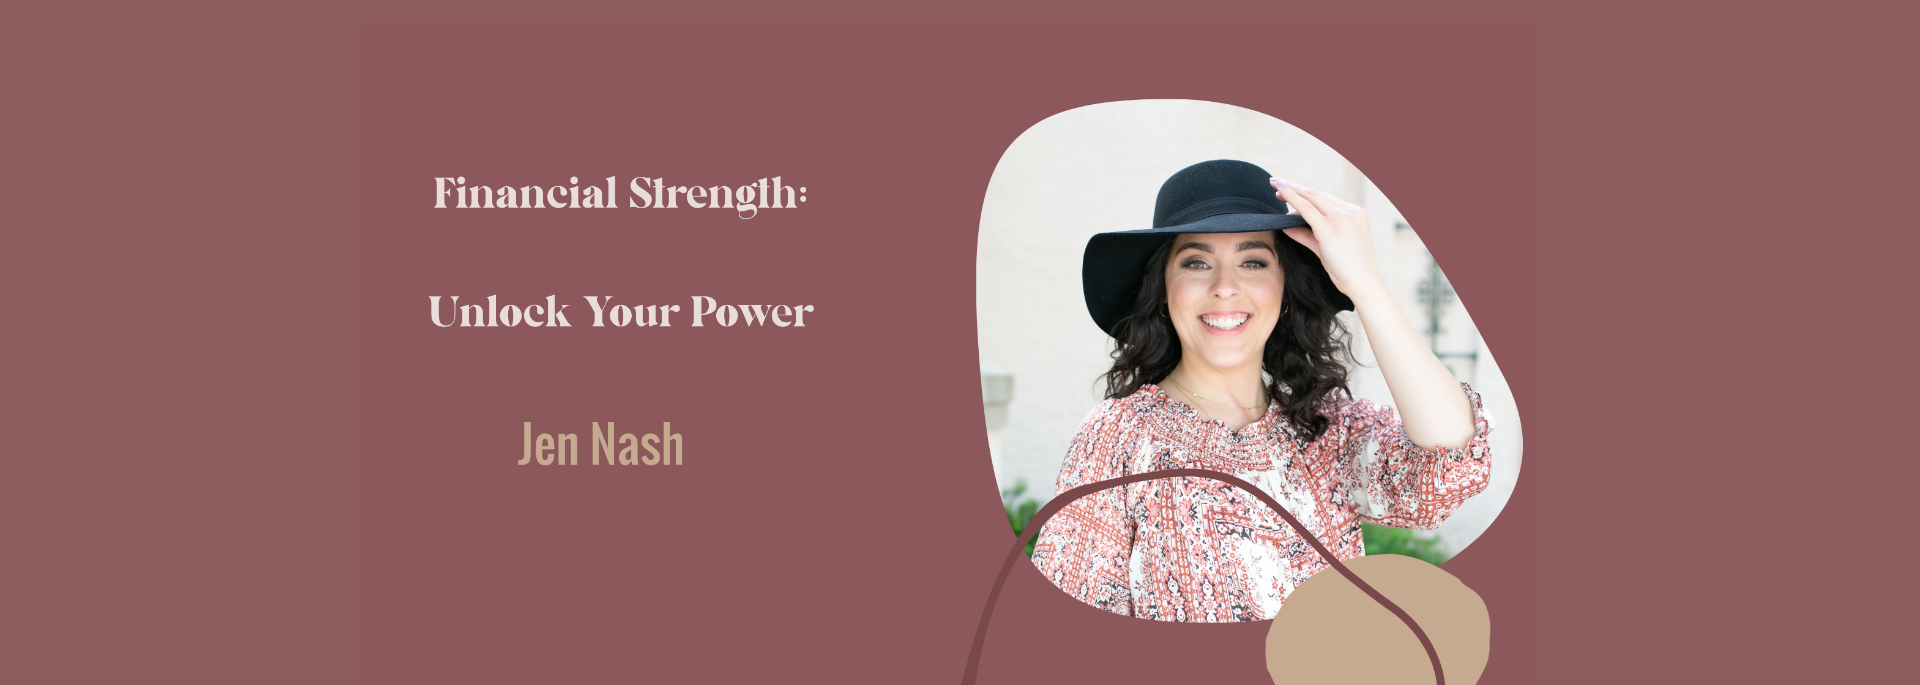 Financial Strength: Unlock Your Power